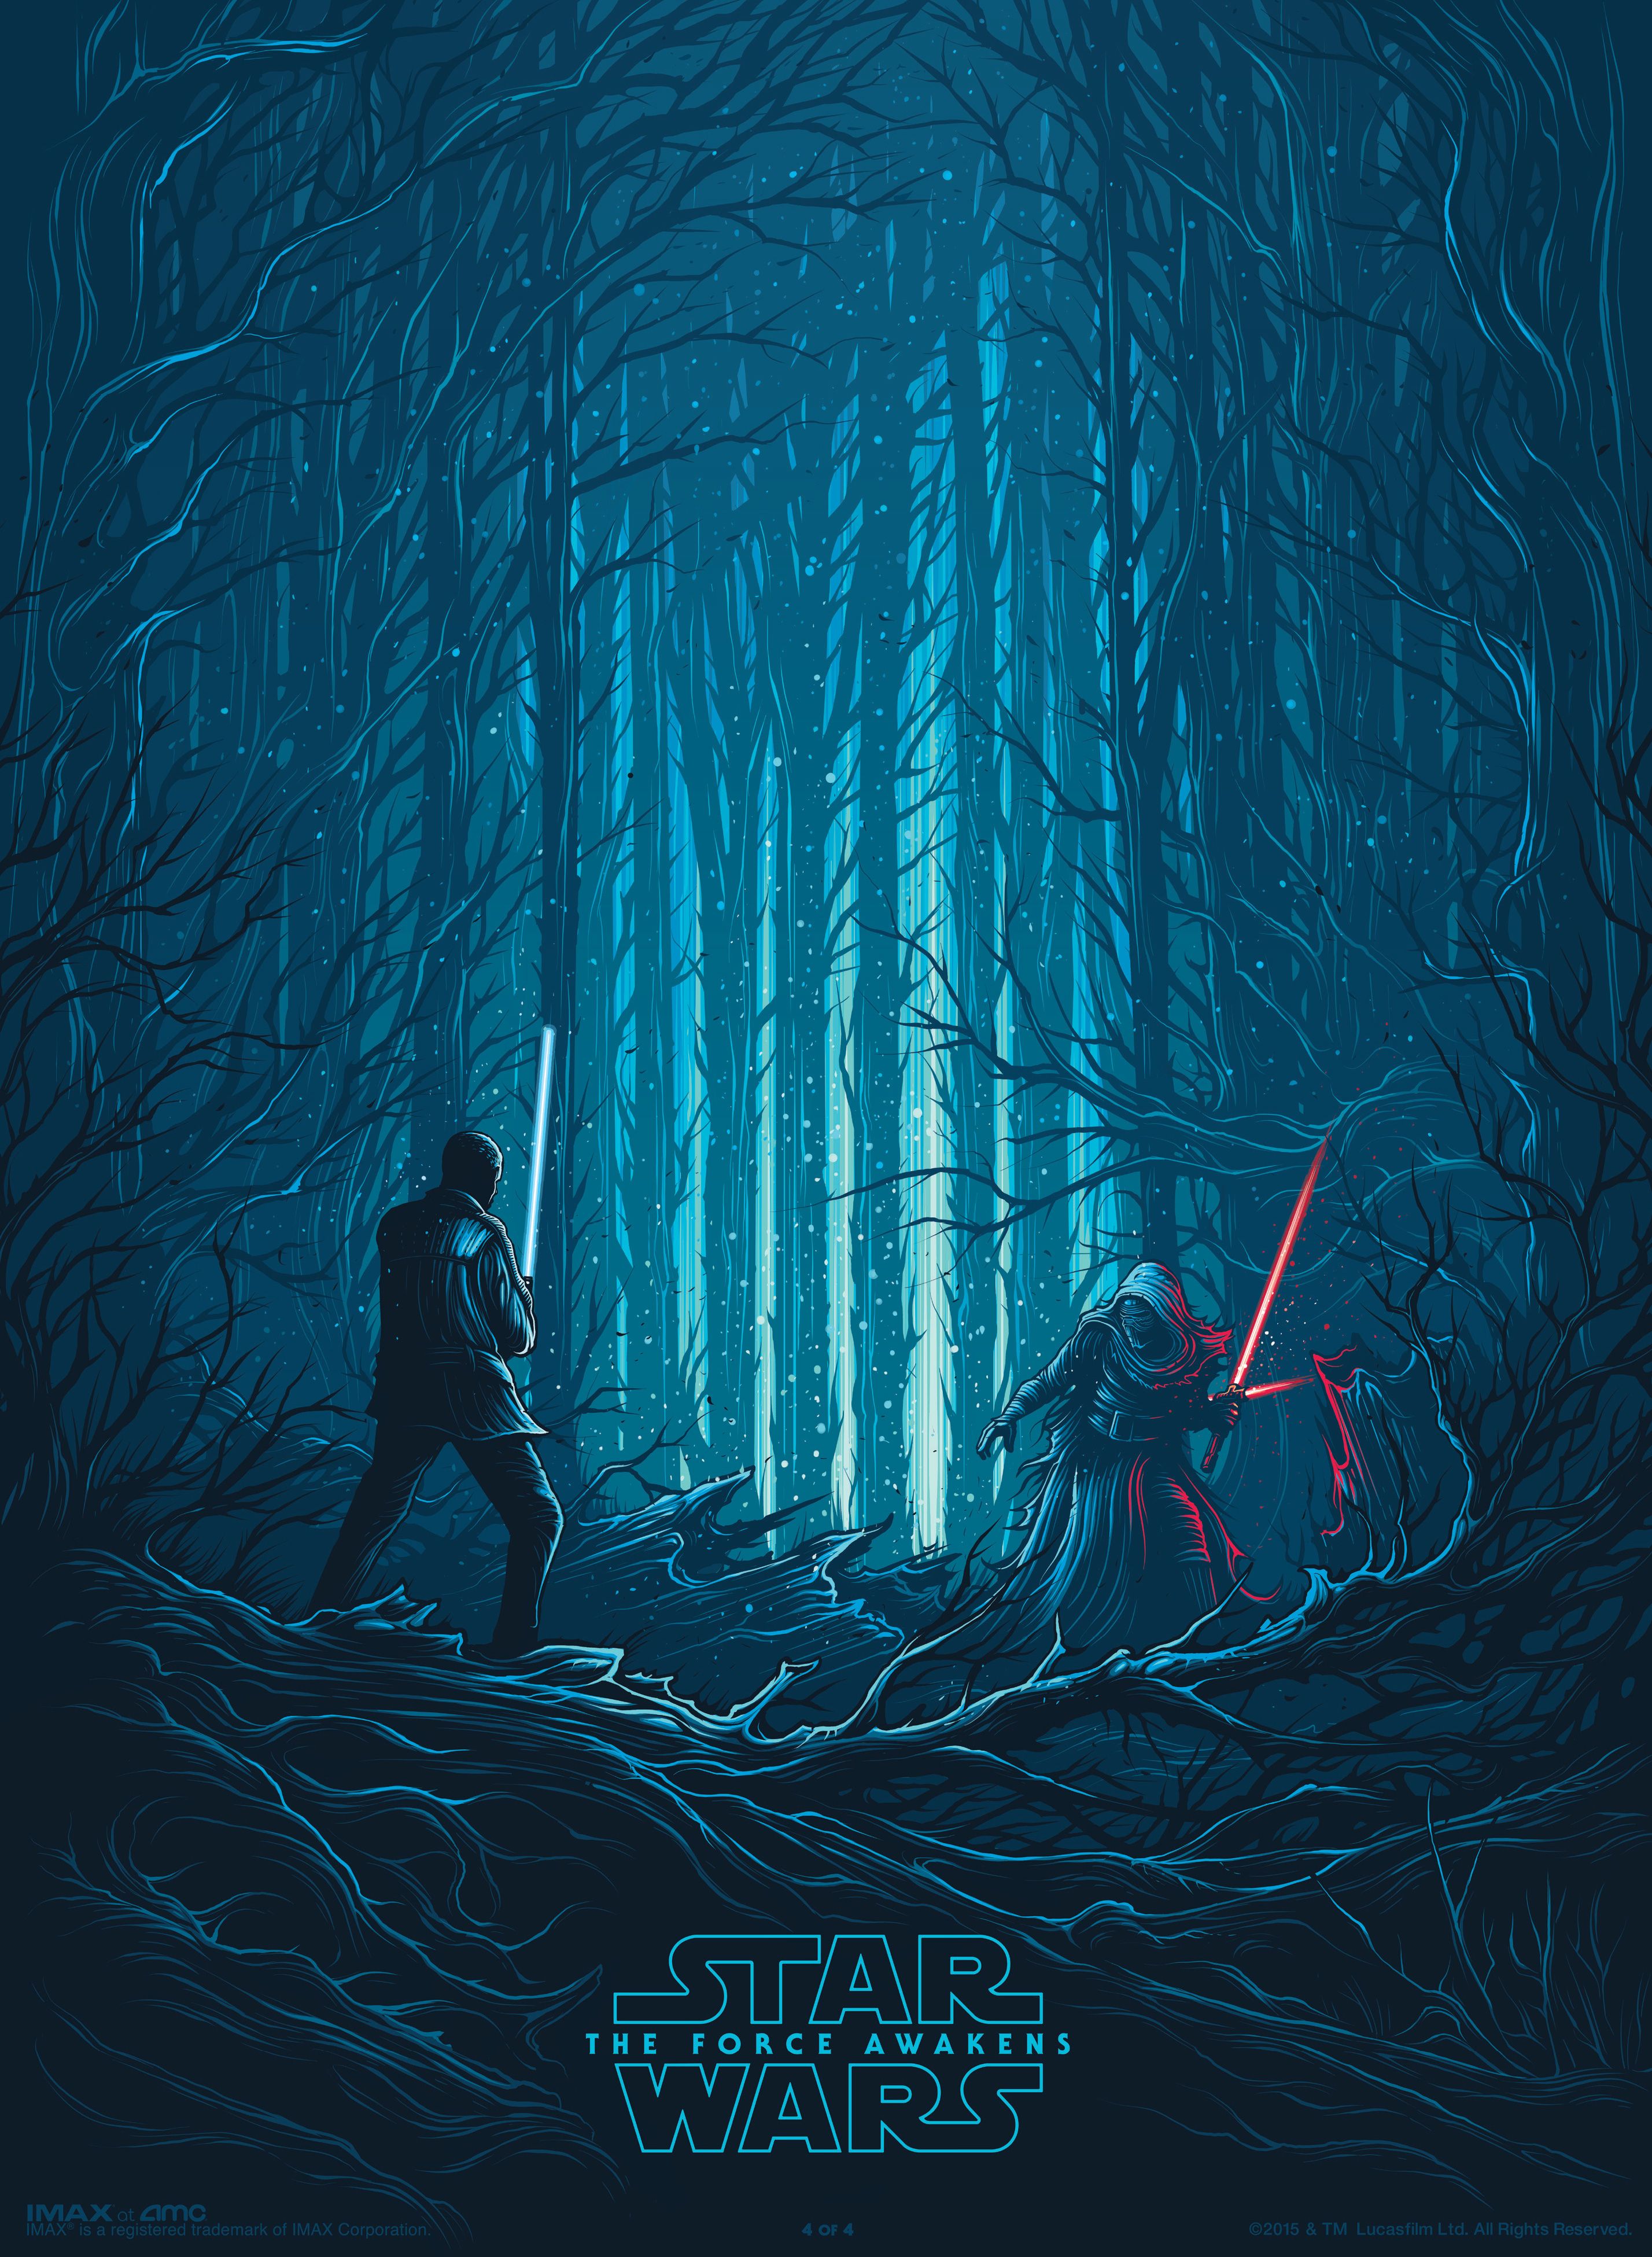 New Star Wars 7 IMAX Poster Teases Lightsaber Duel